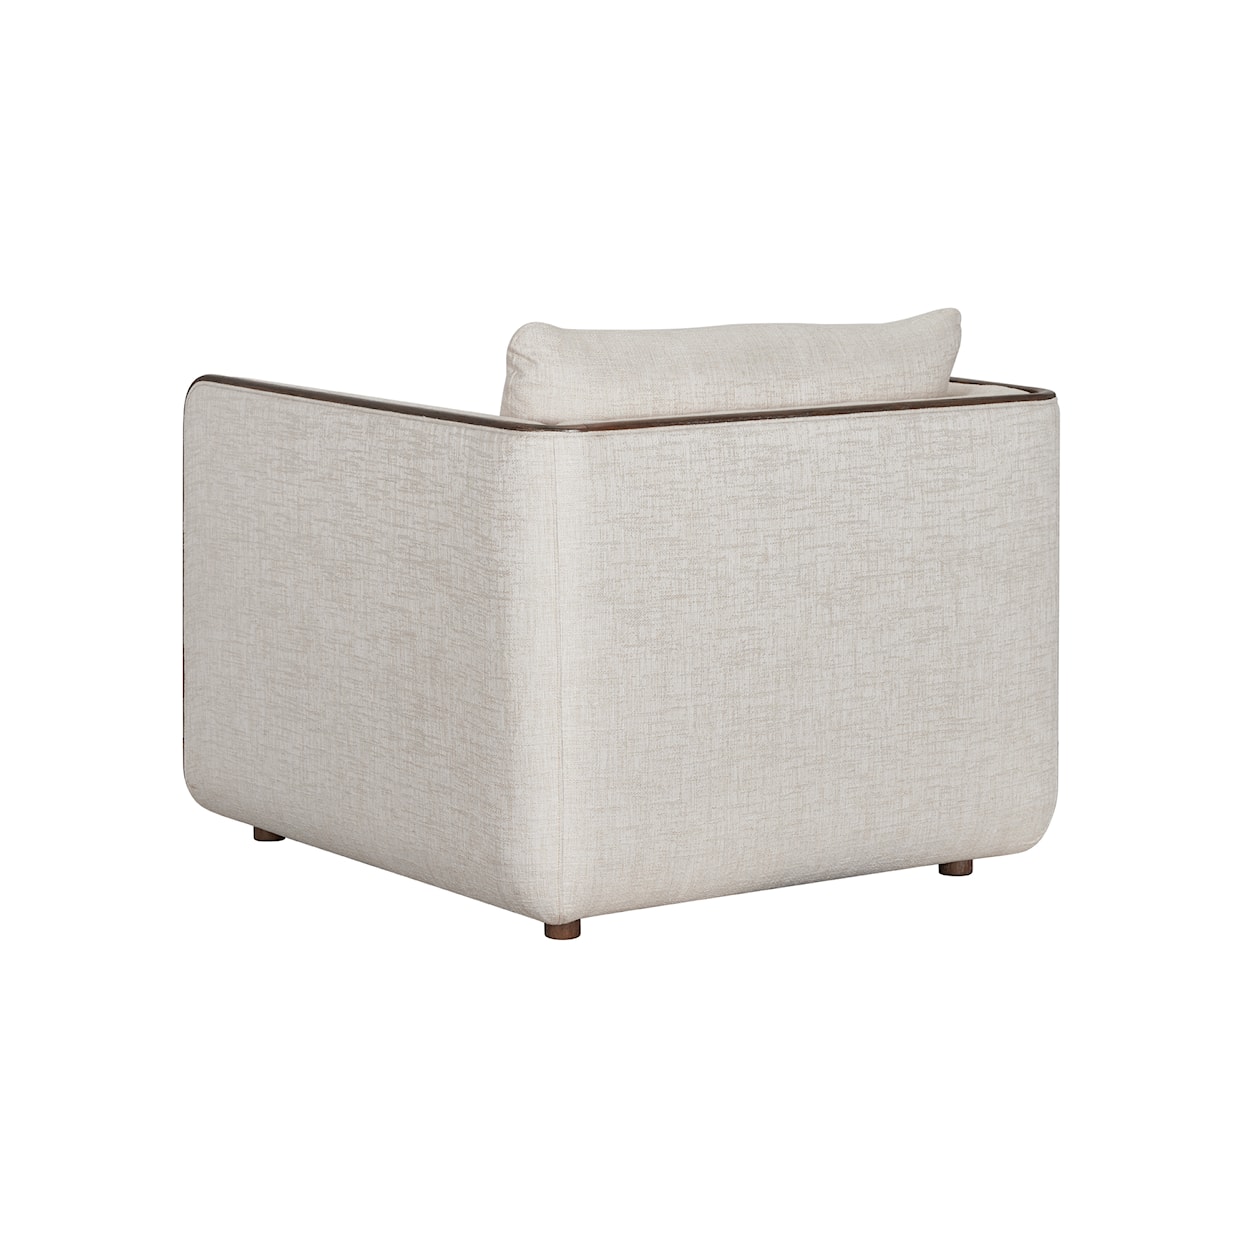 A.R.T. Furniture Inc Sagrada Uph Lounge Chair, C-Ivory